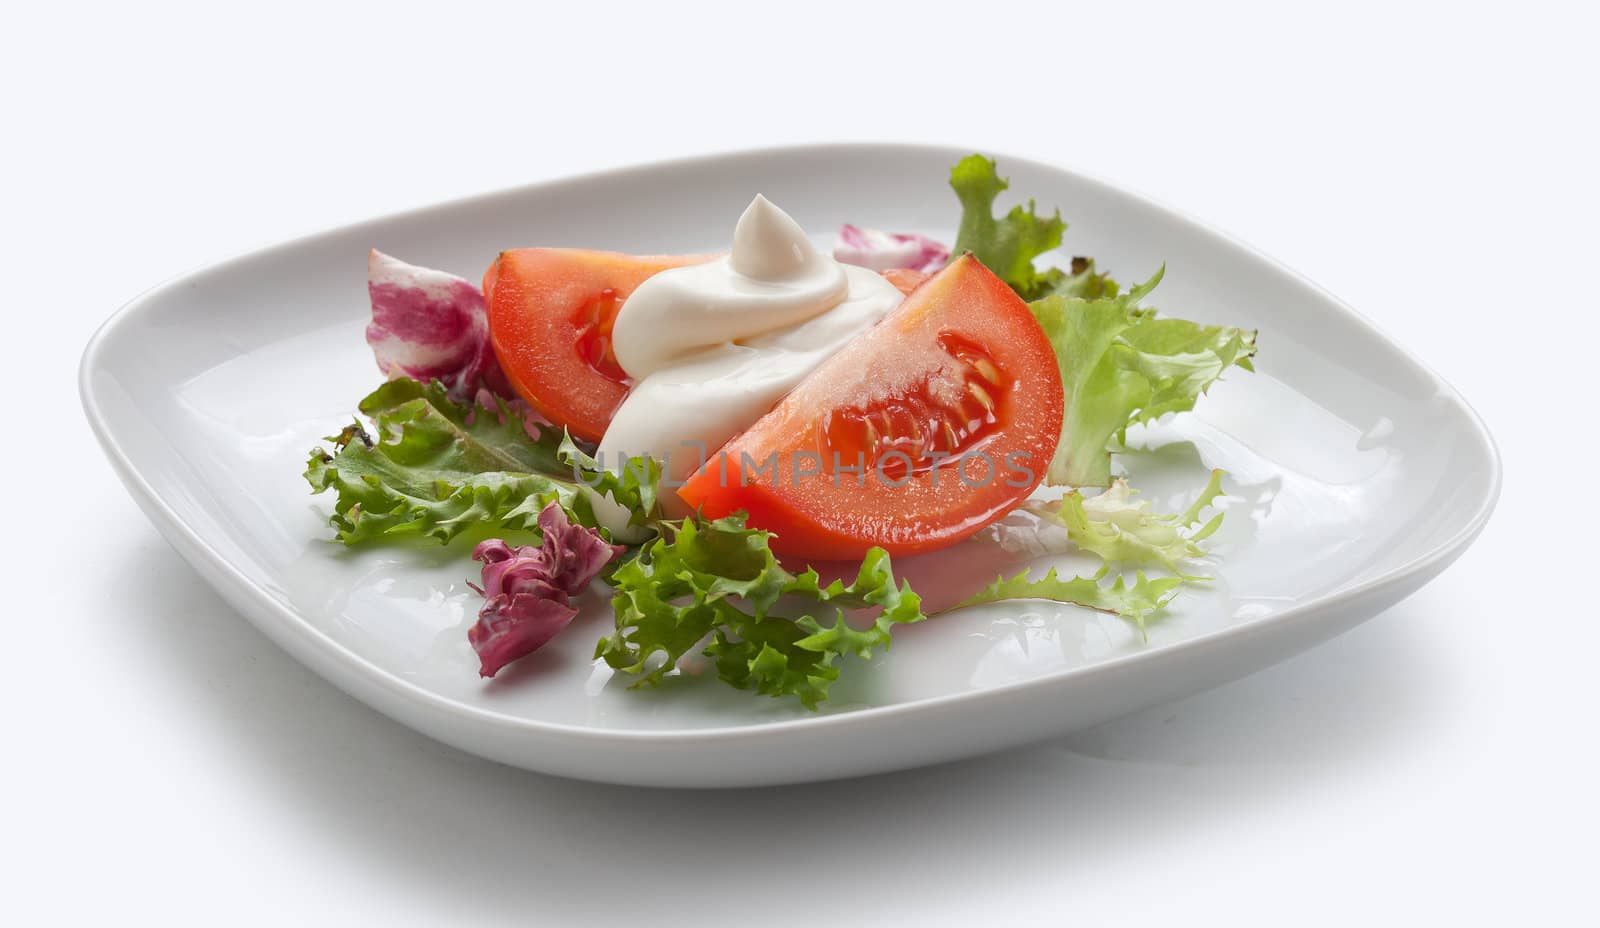 Salad by Angorius